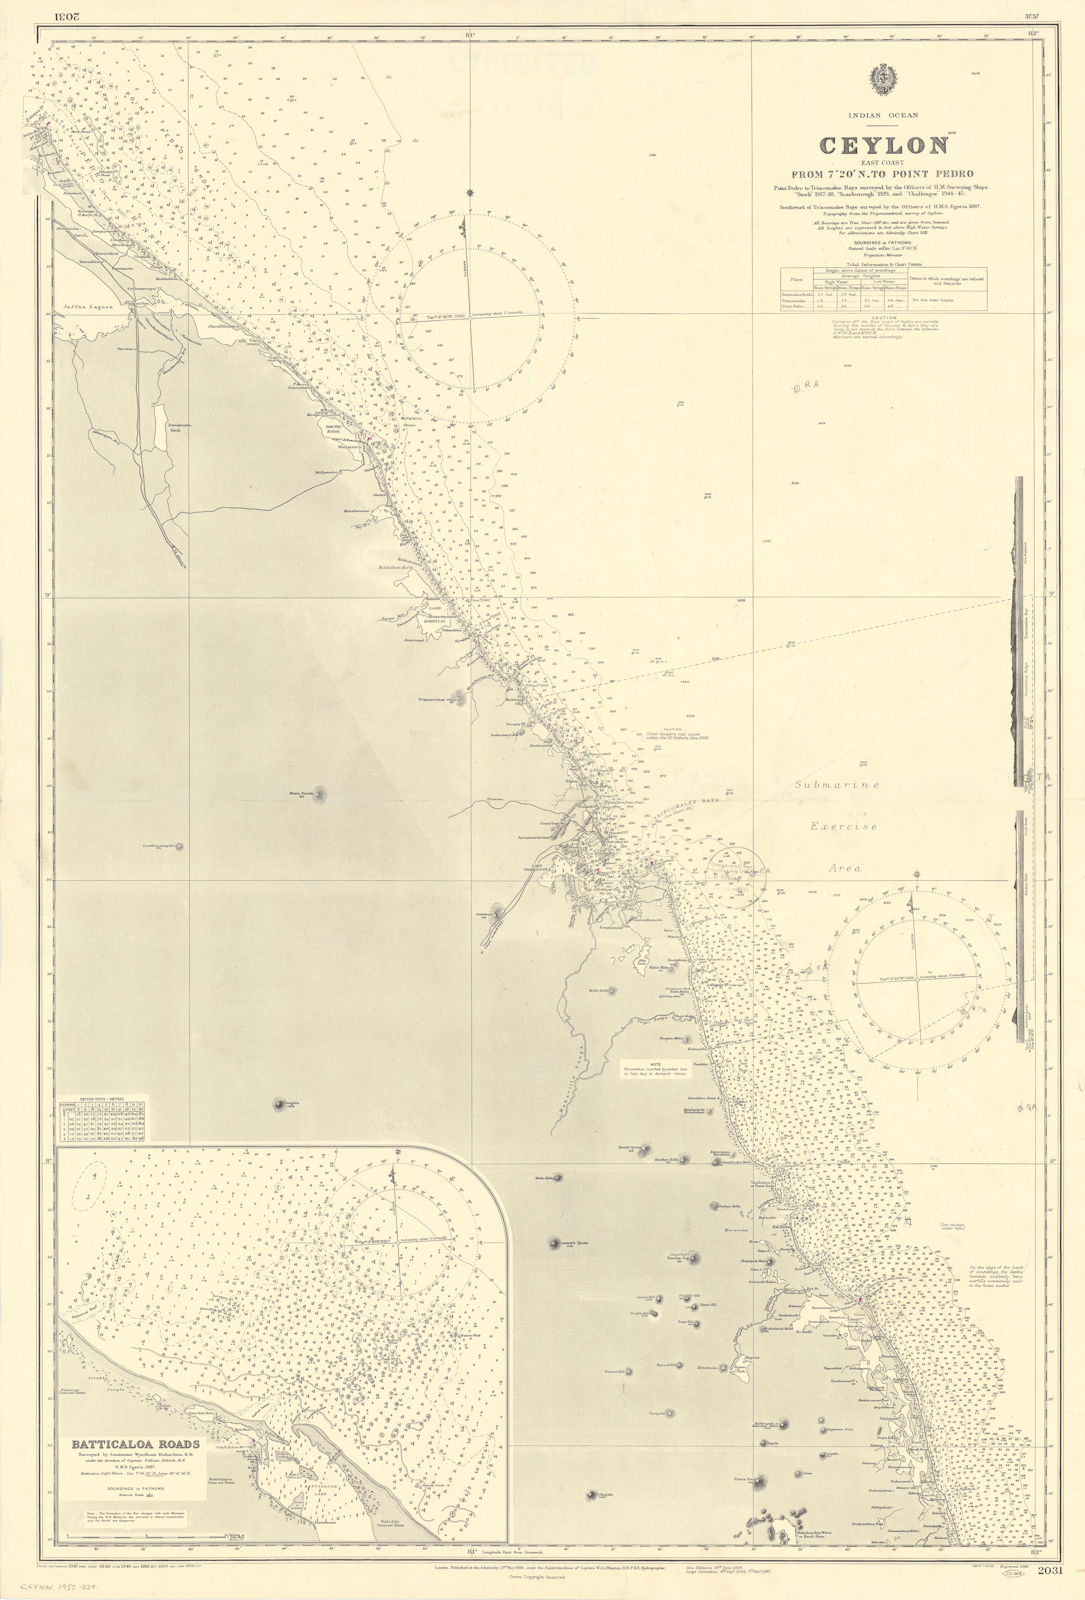 Sri Lanka Ceylon NE coast Batticaloa Roads ADMIRALTY sea chart 1888 (1956) map